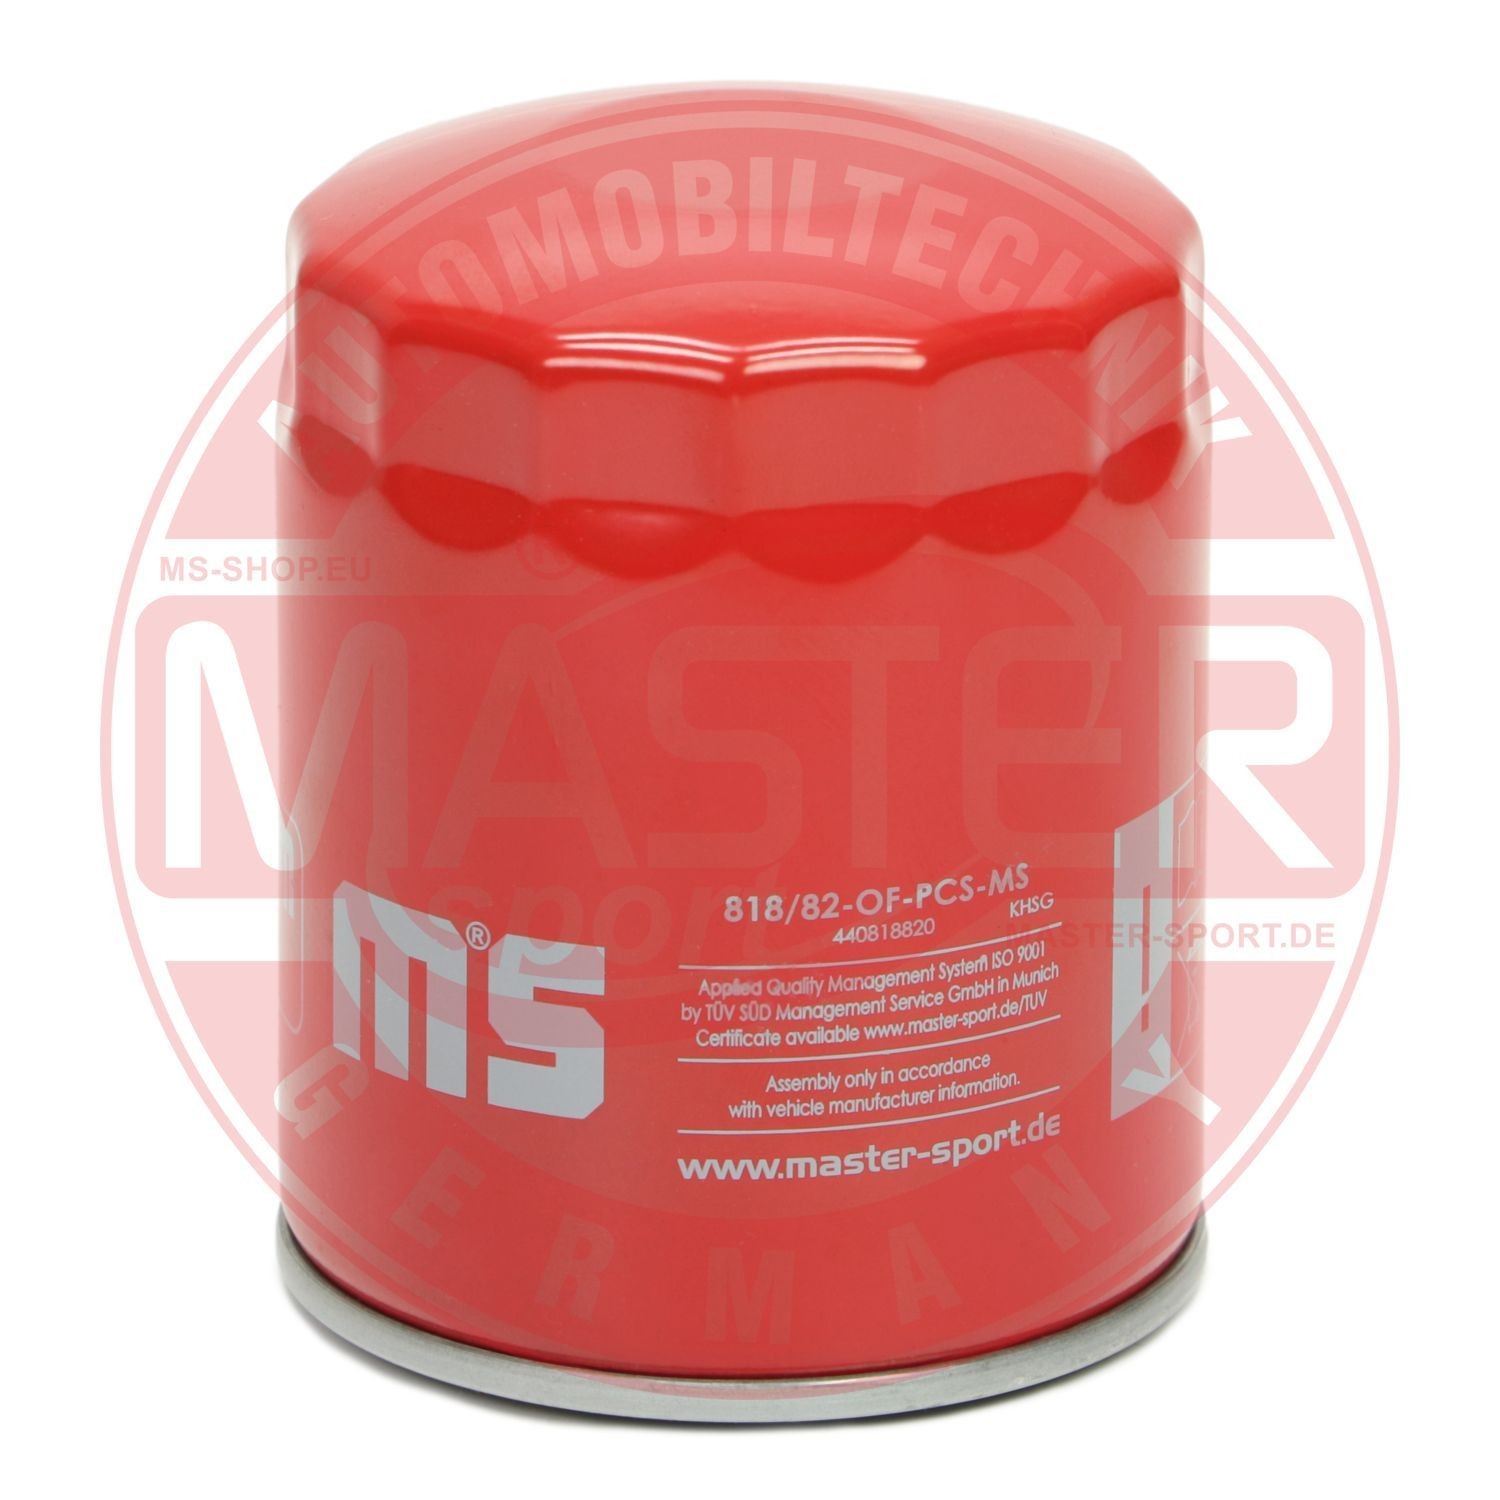 440818820 MASTER-SPORT 818/82-OF-PCS-MS Oil filter 15208F4301